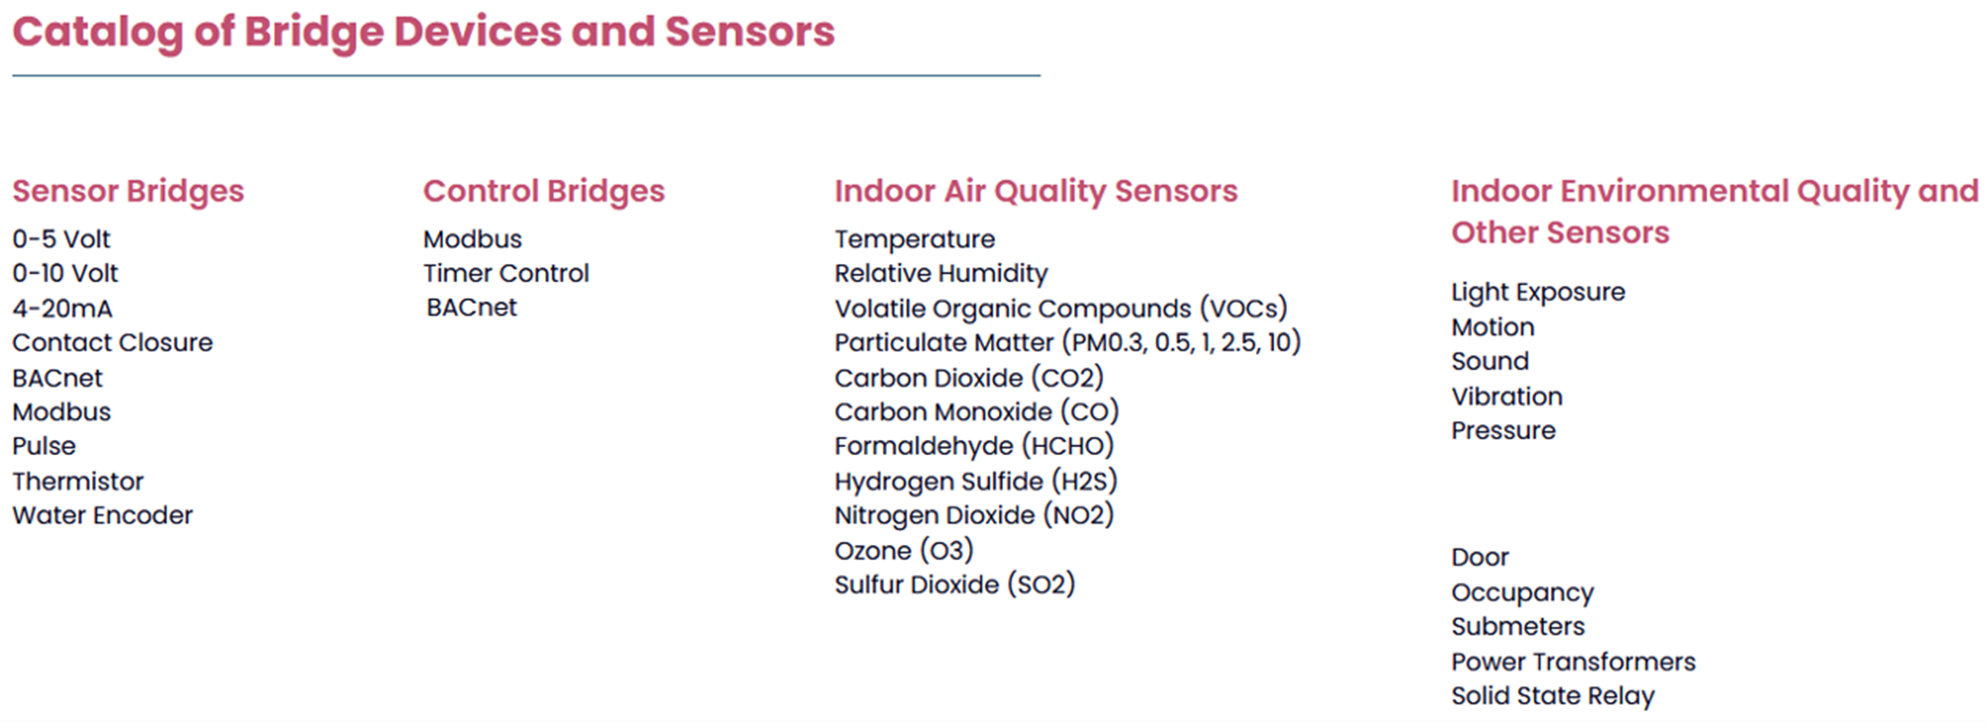 Catalog of Bridge Devices and Sensors